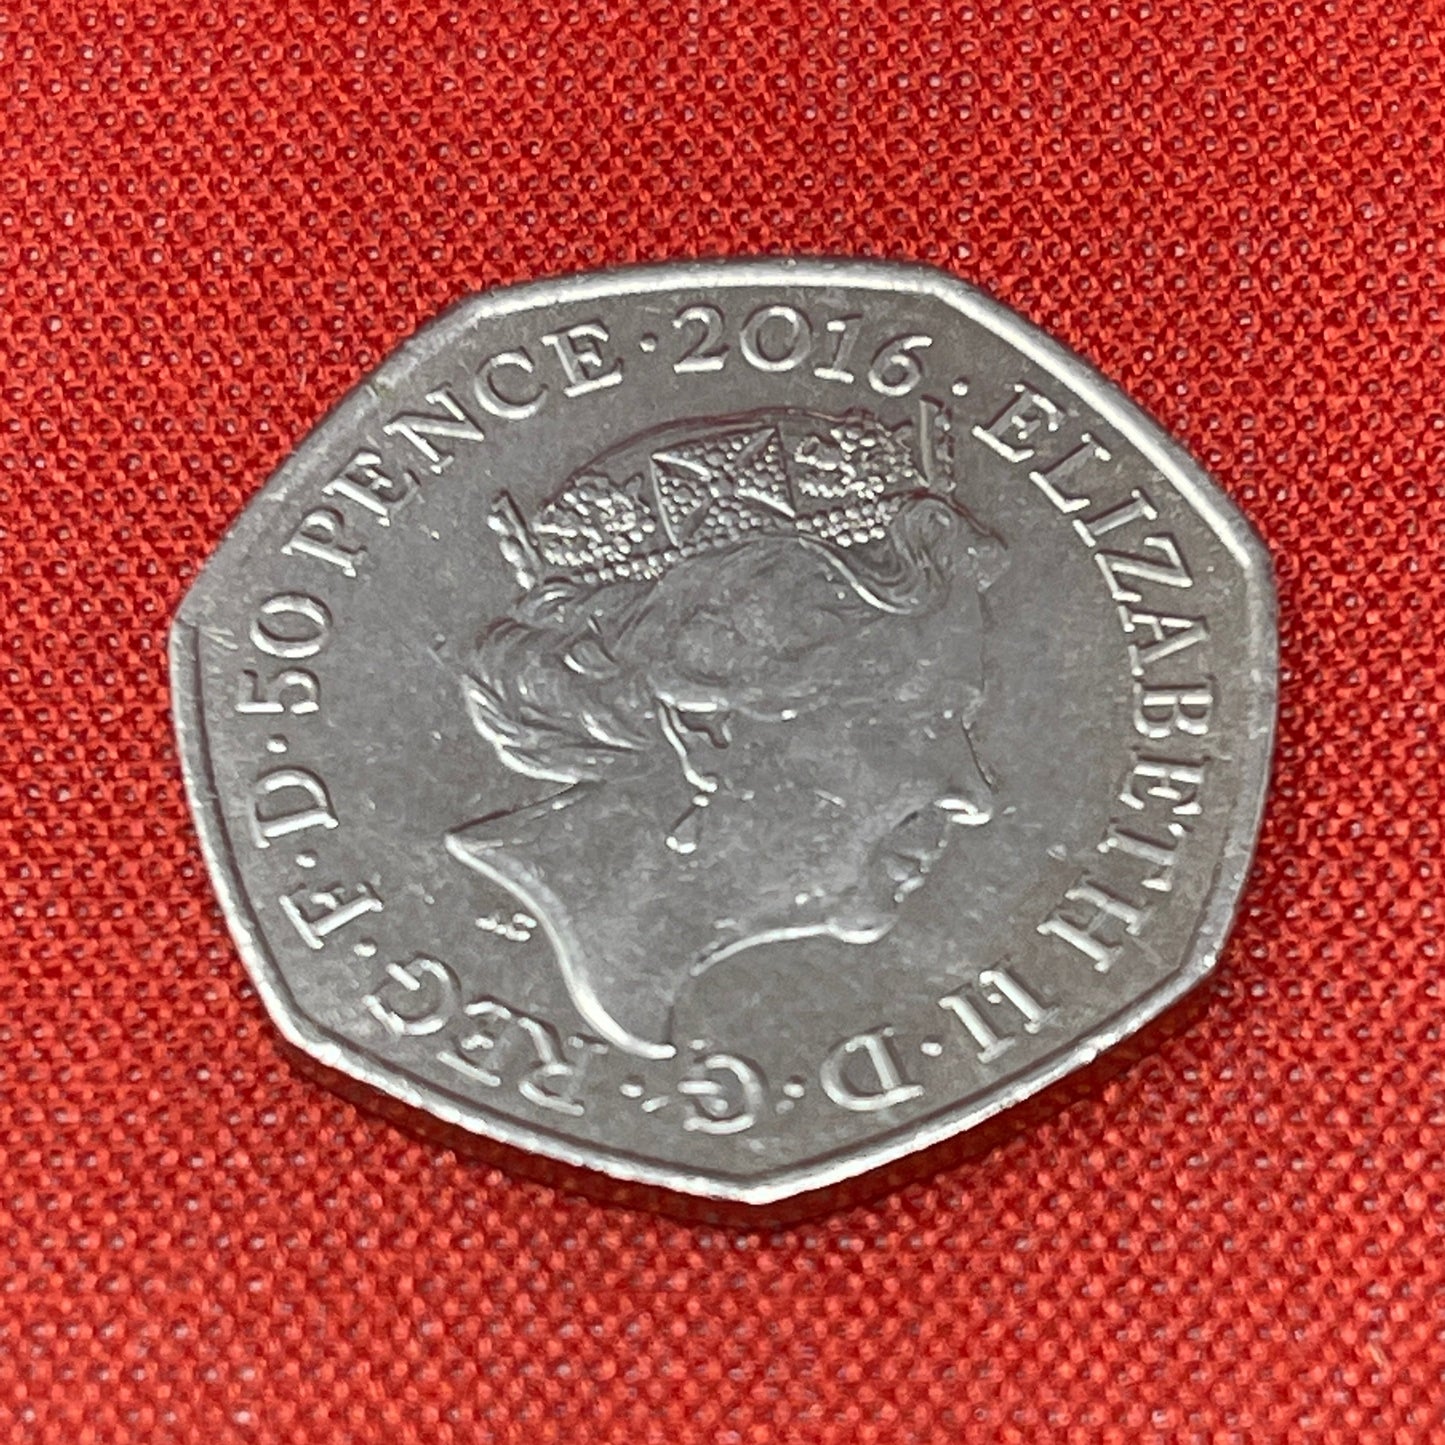 Beatrix Potter Squirrel Nutkin 50p Coin 2016